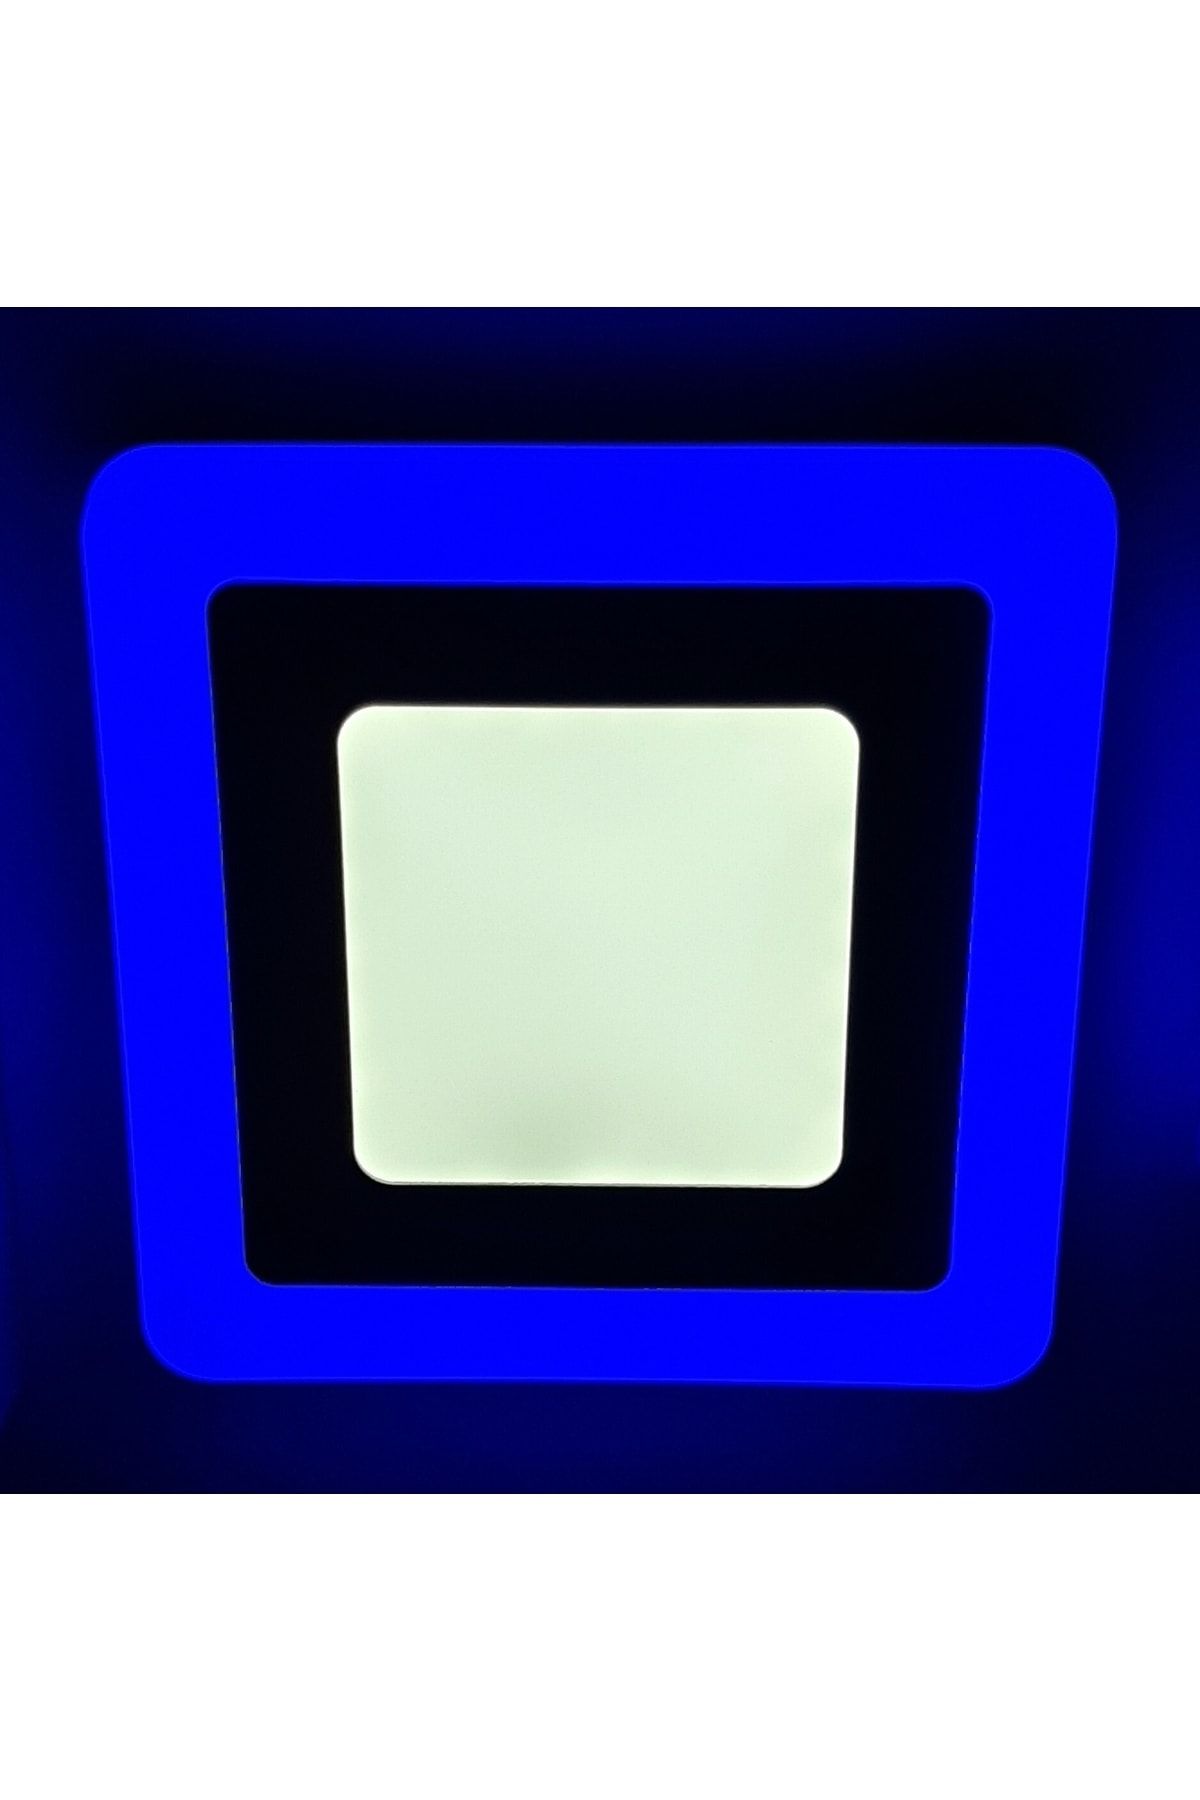 CNL Çift Renkli 6+3 W Led Panel Sıva Üstü Kare Spot Armatür (Mavi - Beyaz)